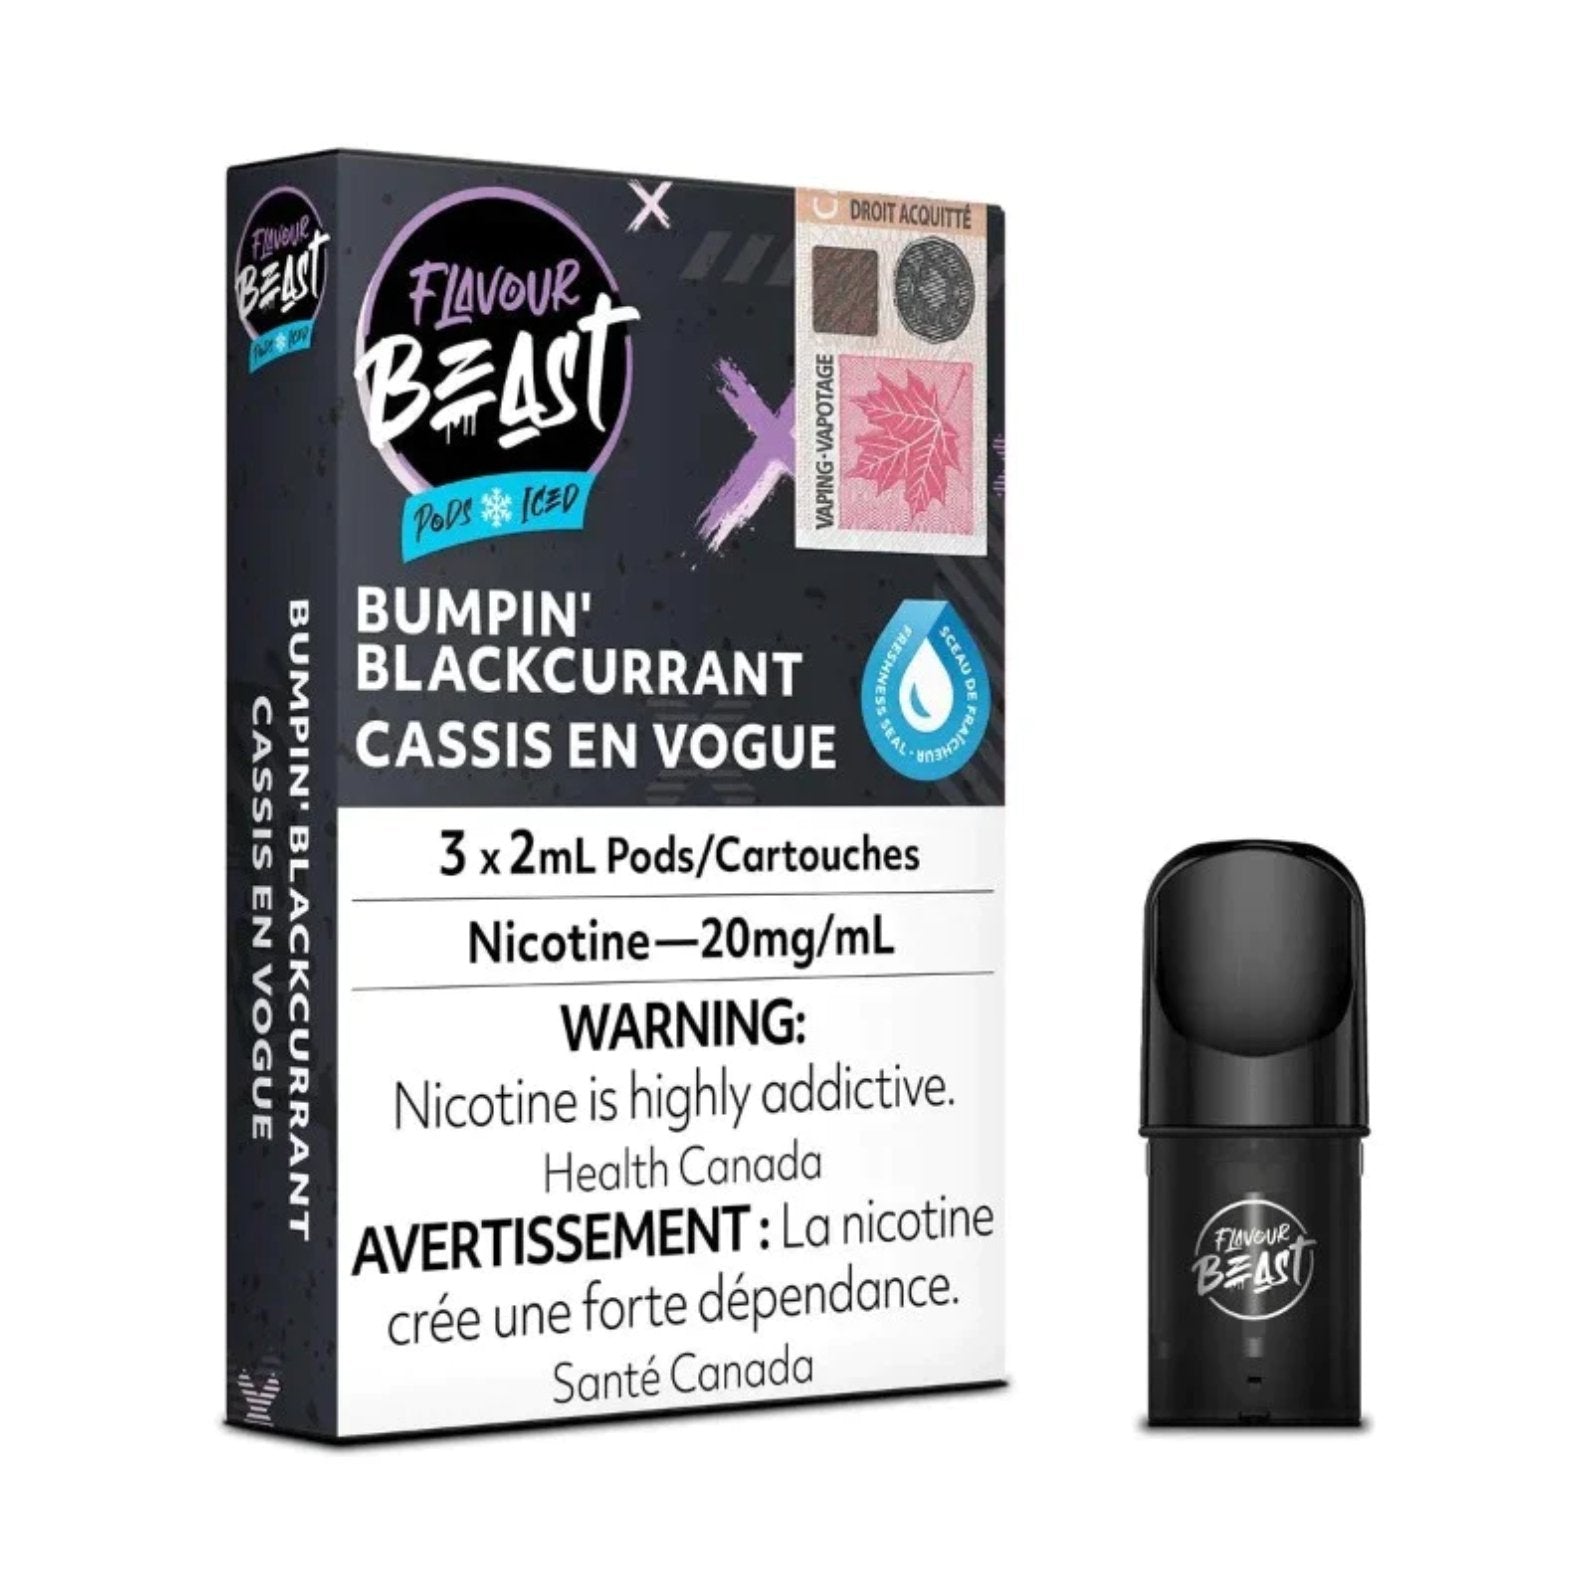 Flavour Beast Pods - Bumpin' Blackcurrant Iced - Vape Crush